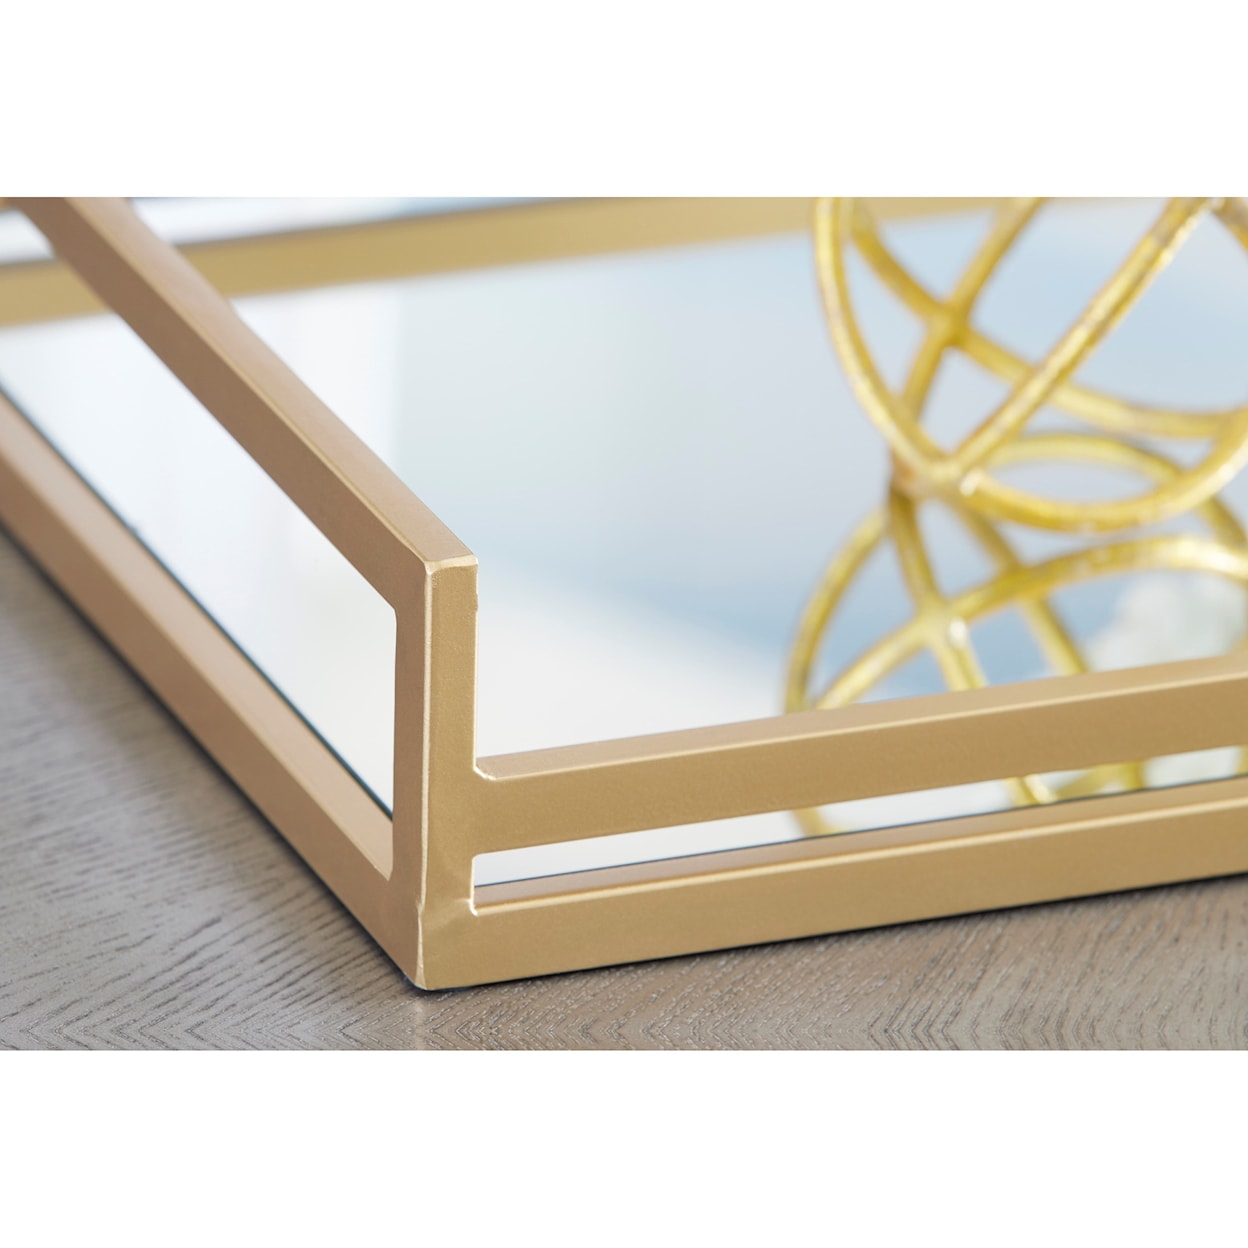 Ashley Furniture Signature Design Accents Derex Gold Finish Tray